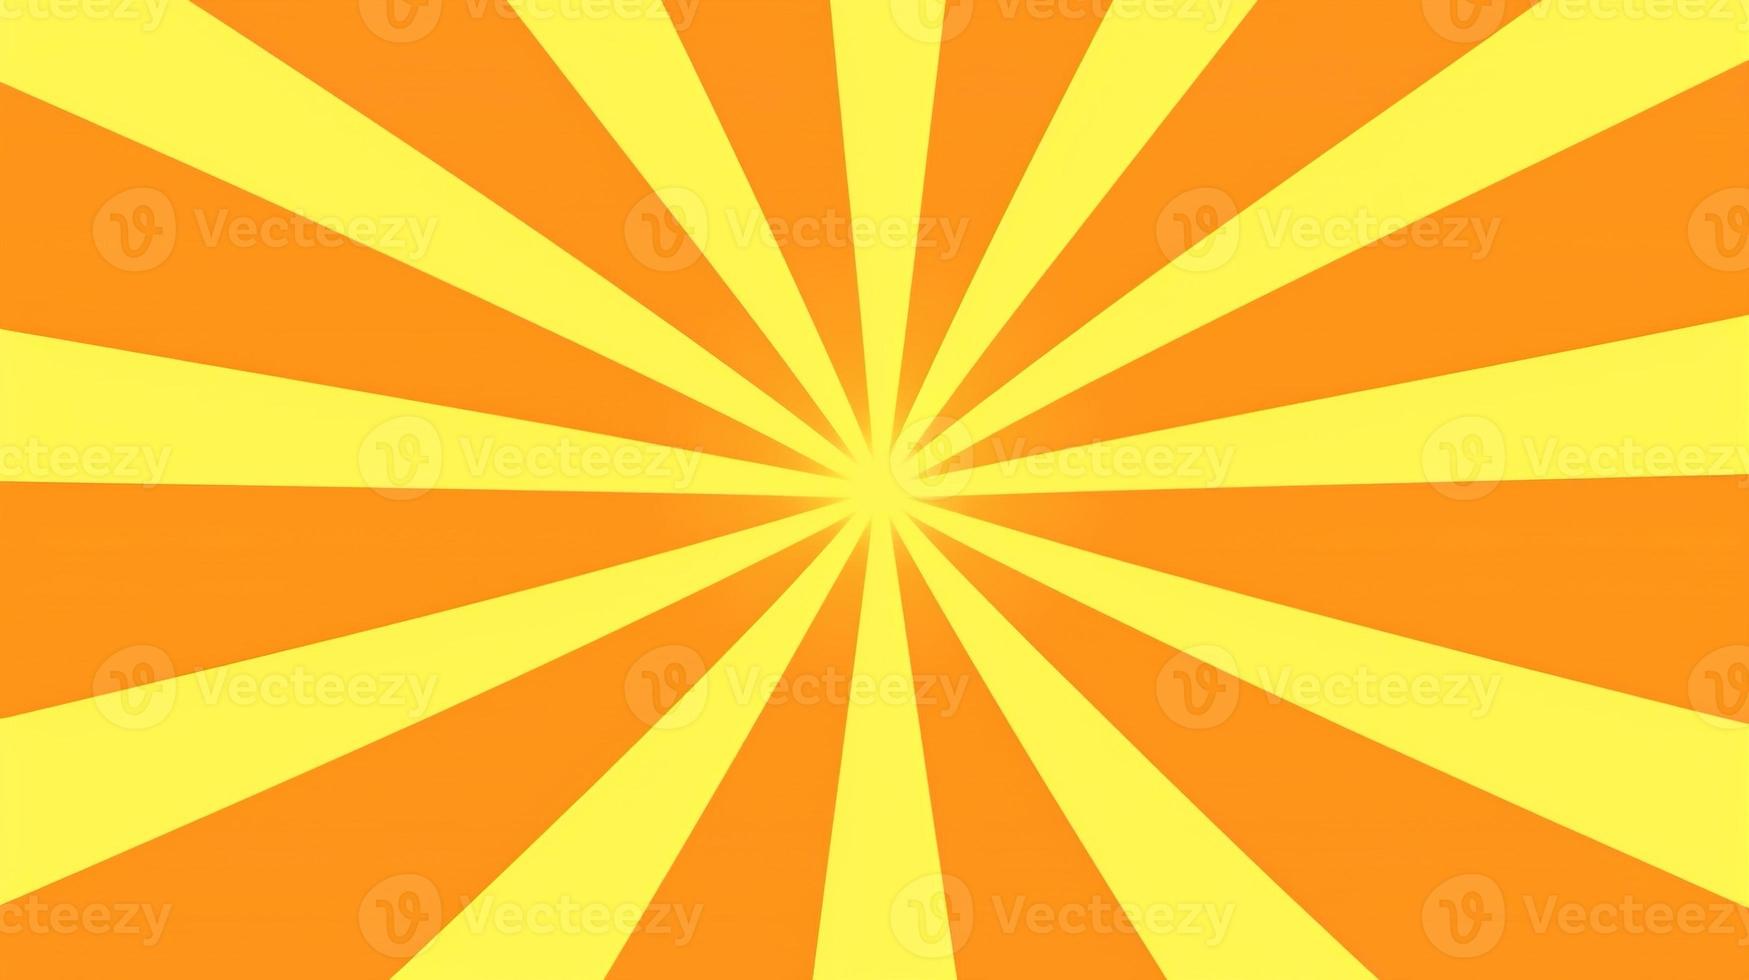 amarelo e laranja reluzente fundo foto